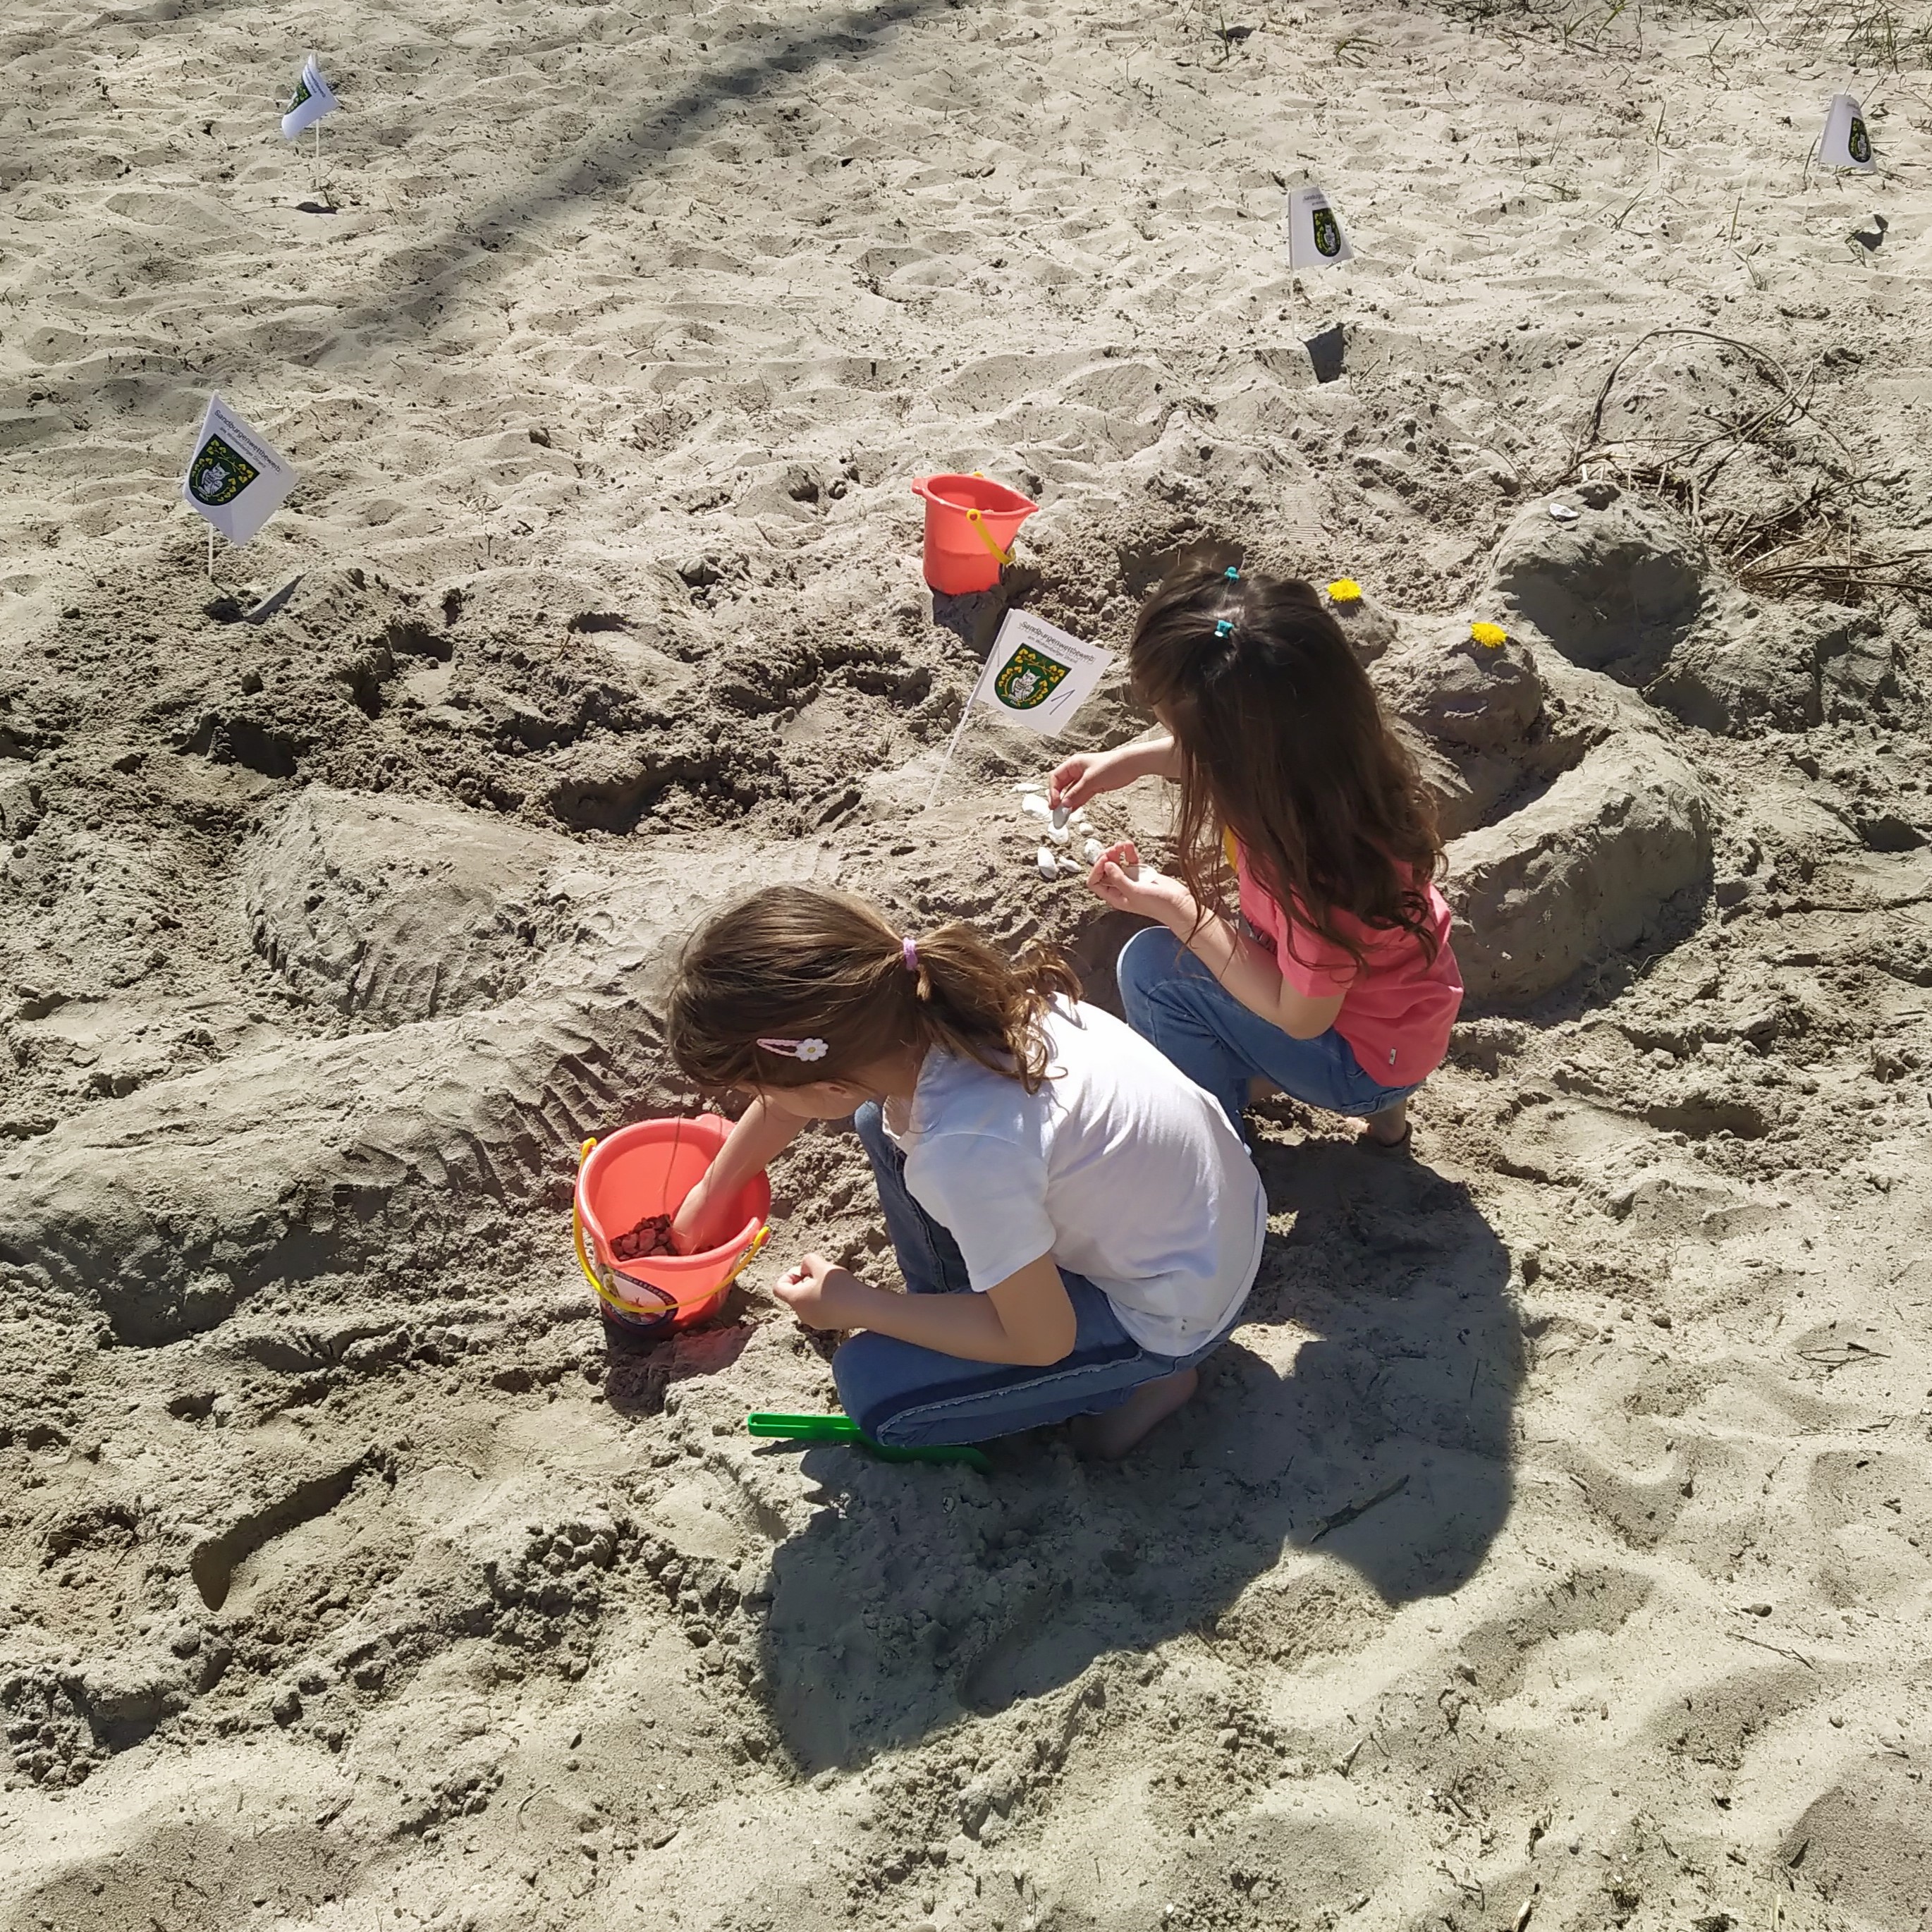 Children building sandcastles on the beach